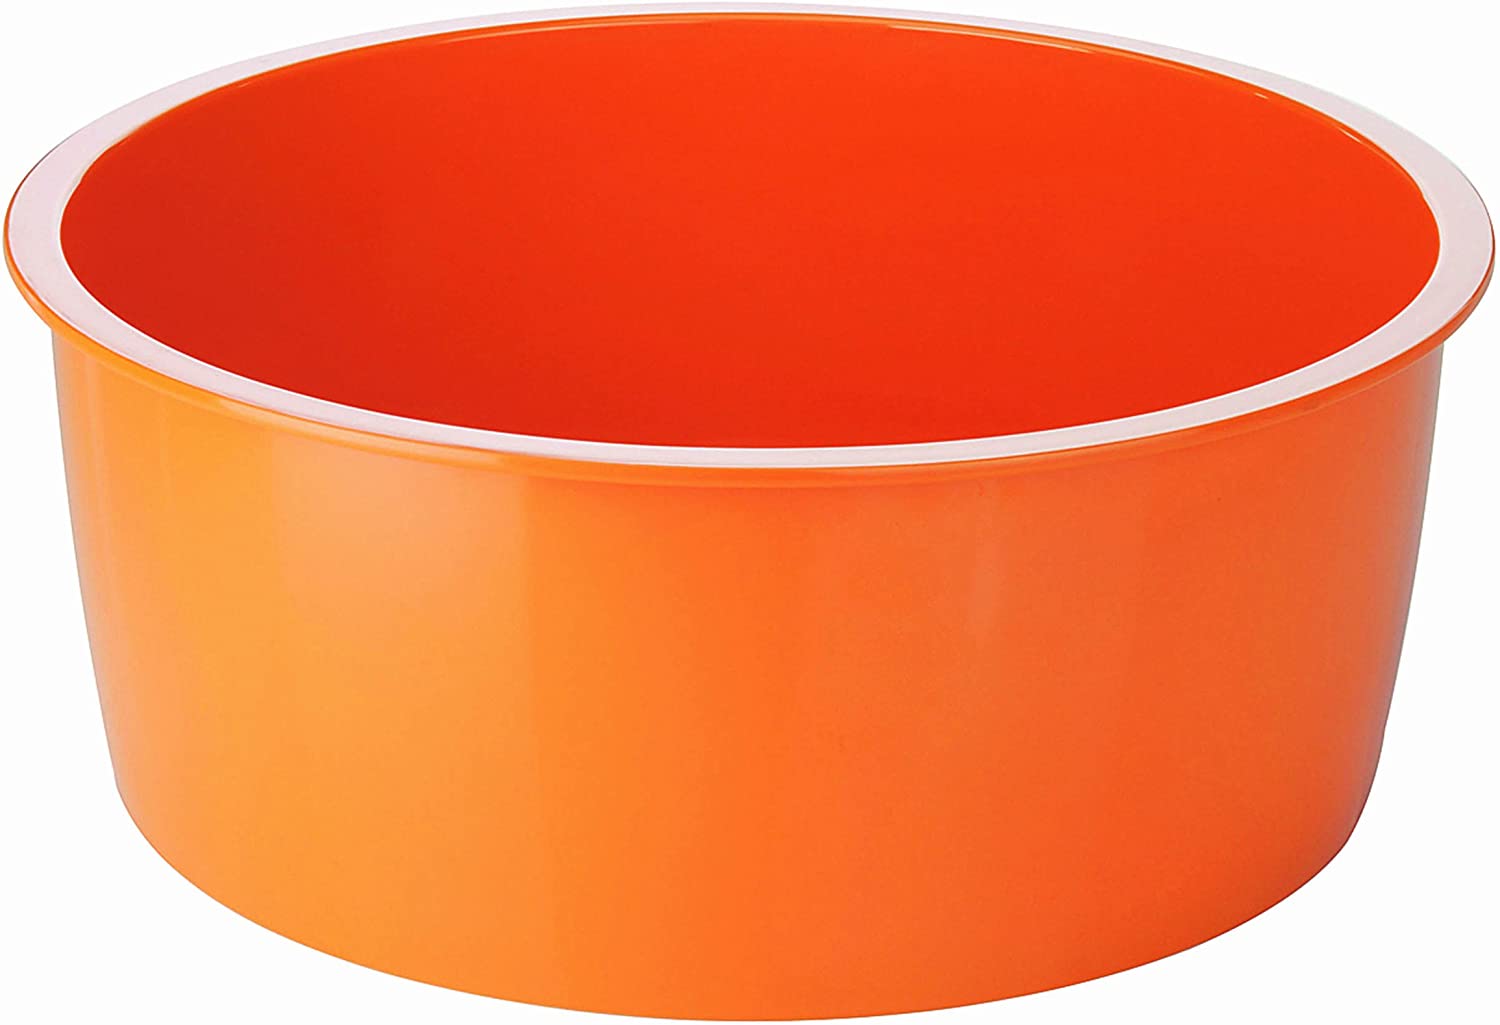 Kuhn Rikon Hotpan Bowl, 22cm, 5.0L, Orange